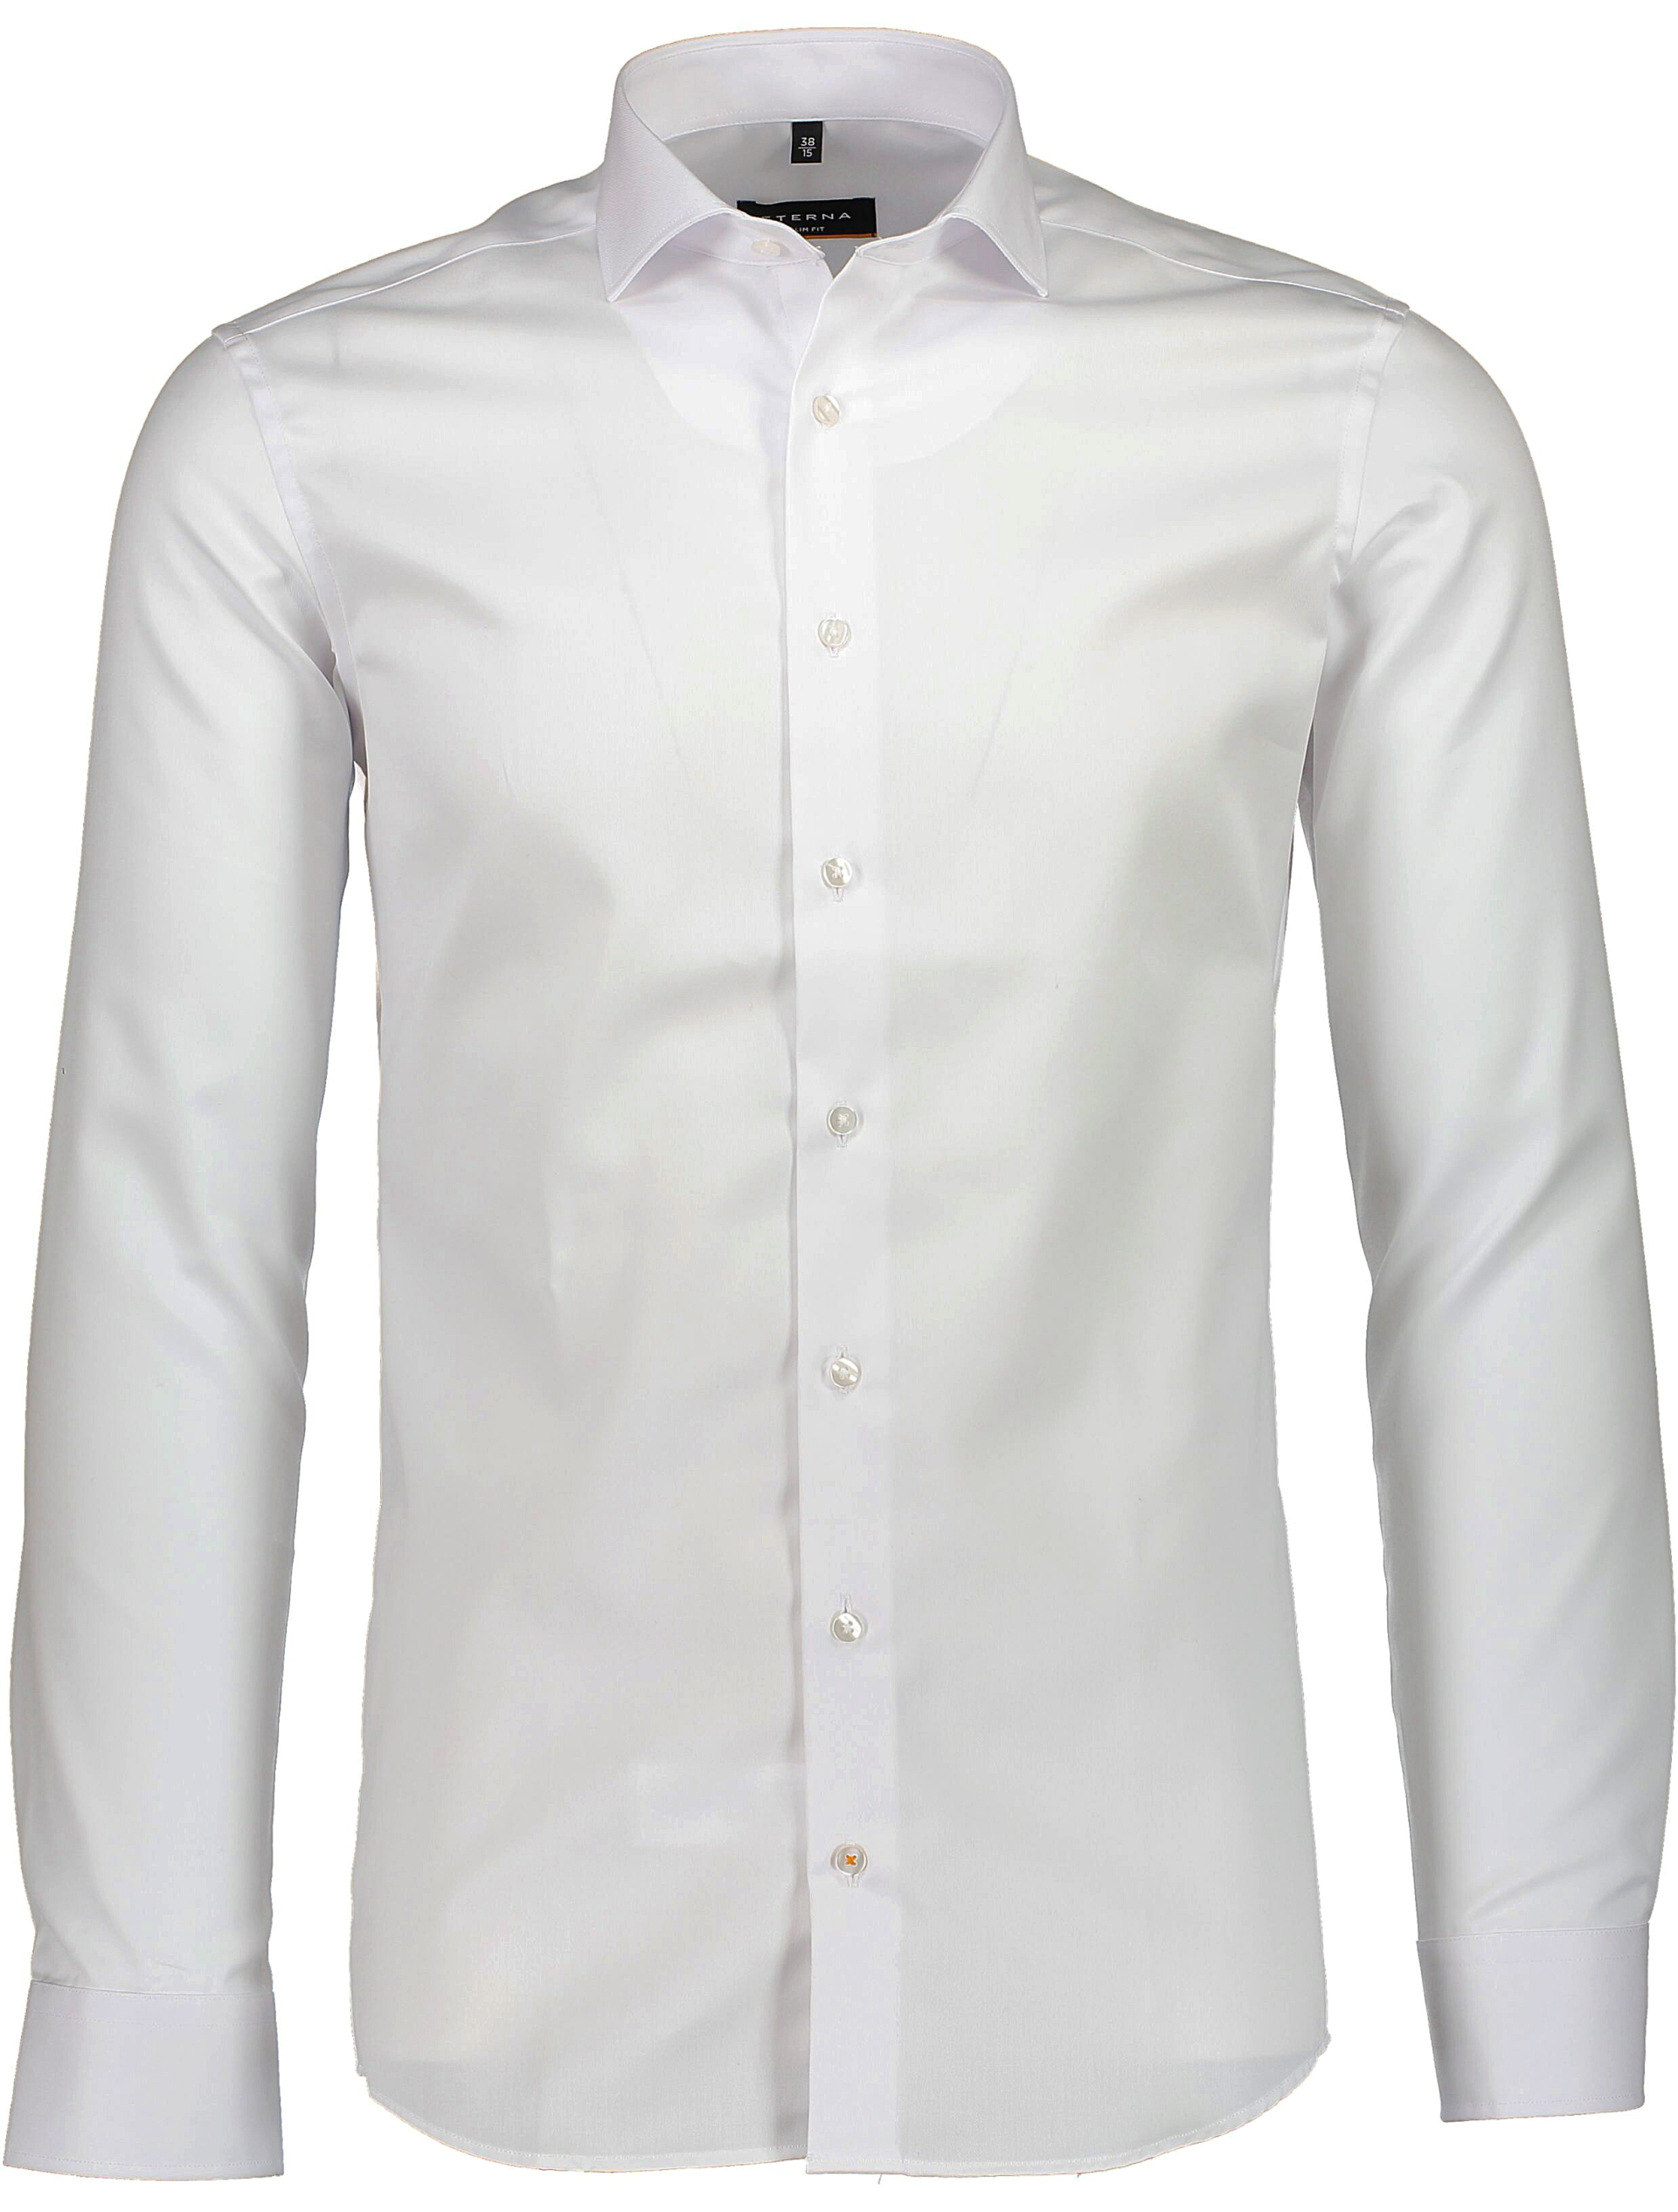 Eterna Business skjorte hvid / 0 hvid cover